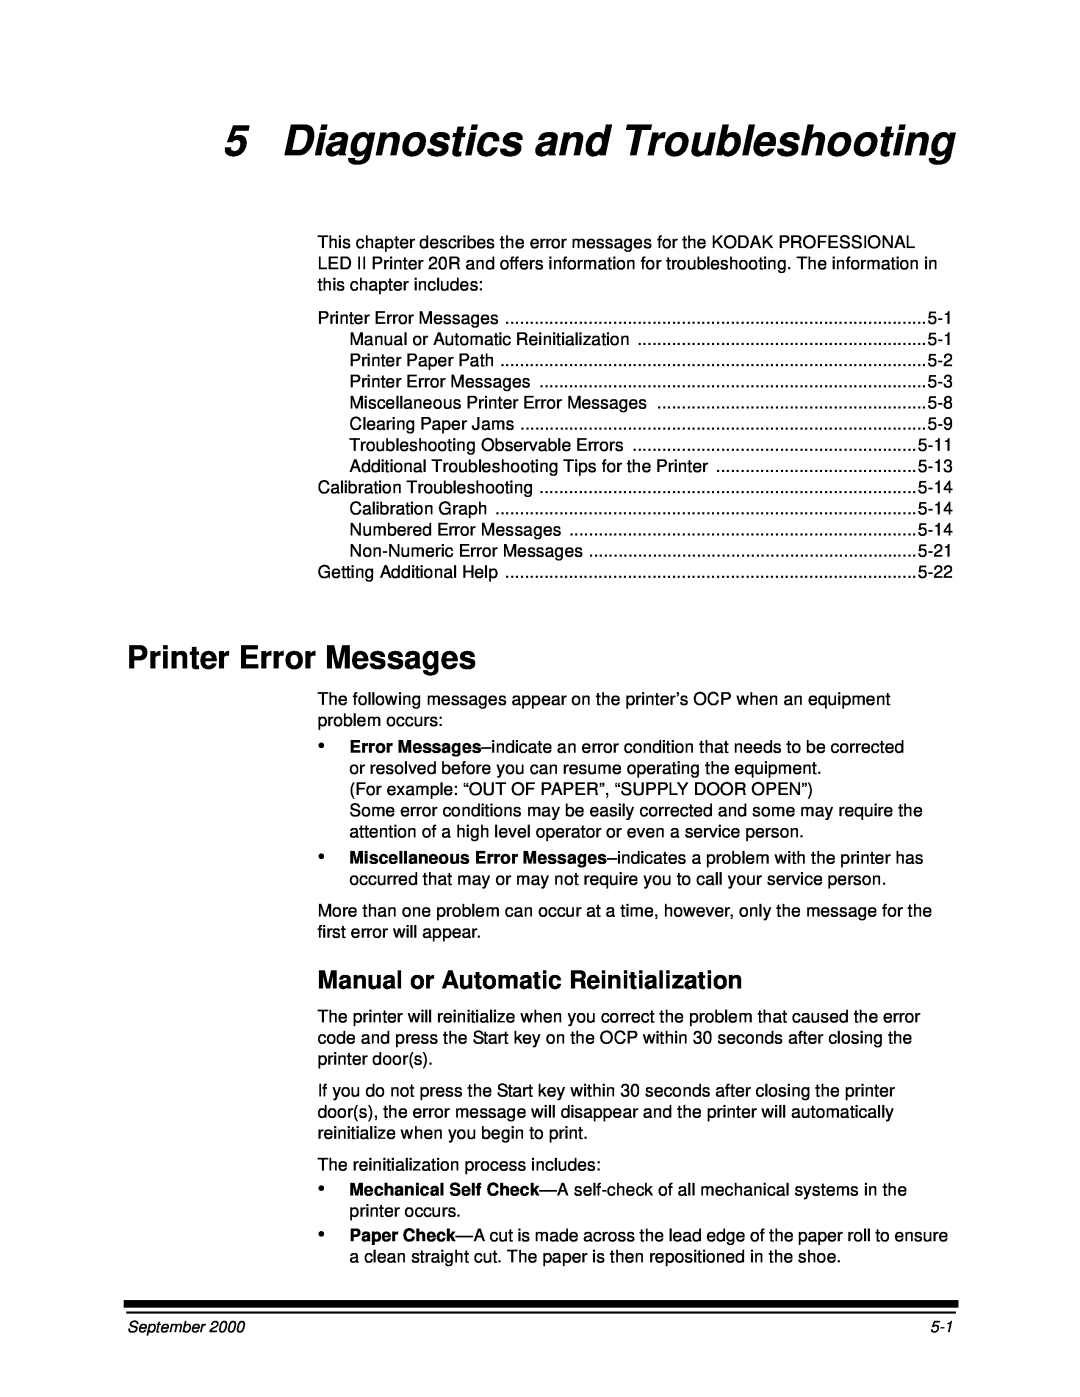 Kodak 20R manual Diagnostics and Troubleshooting, Printer Error Messages, Manual or Automatic Reinitialization 